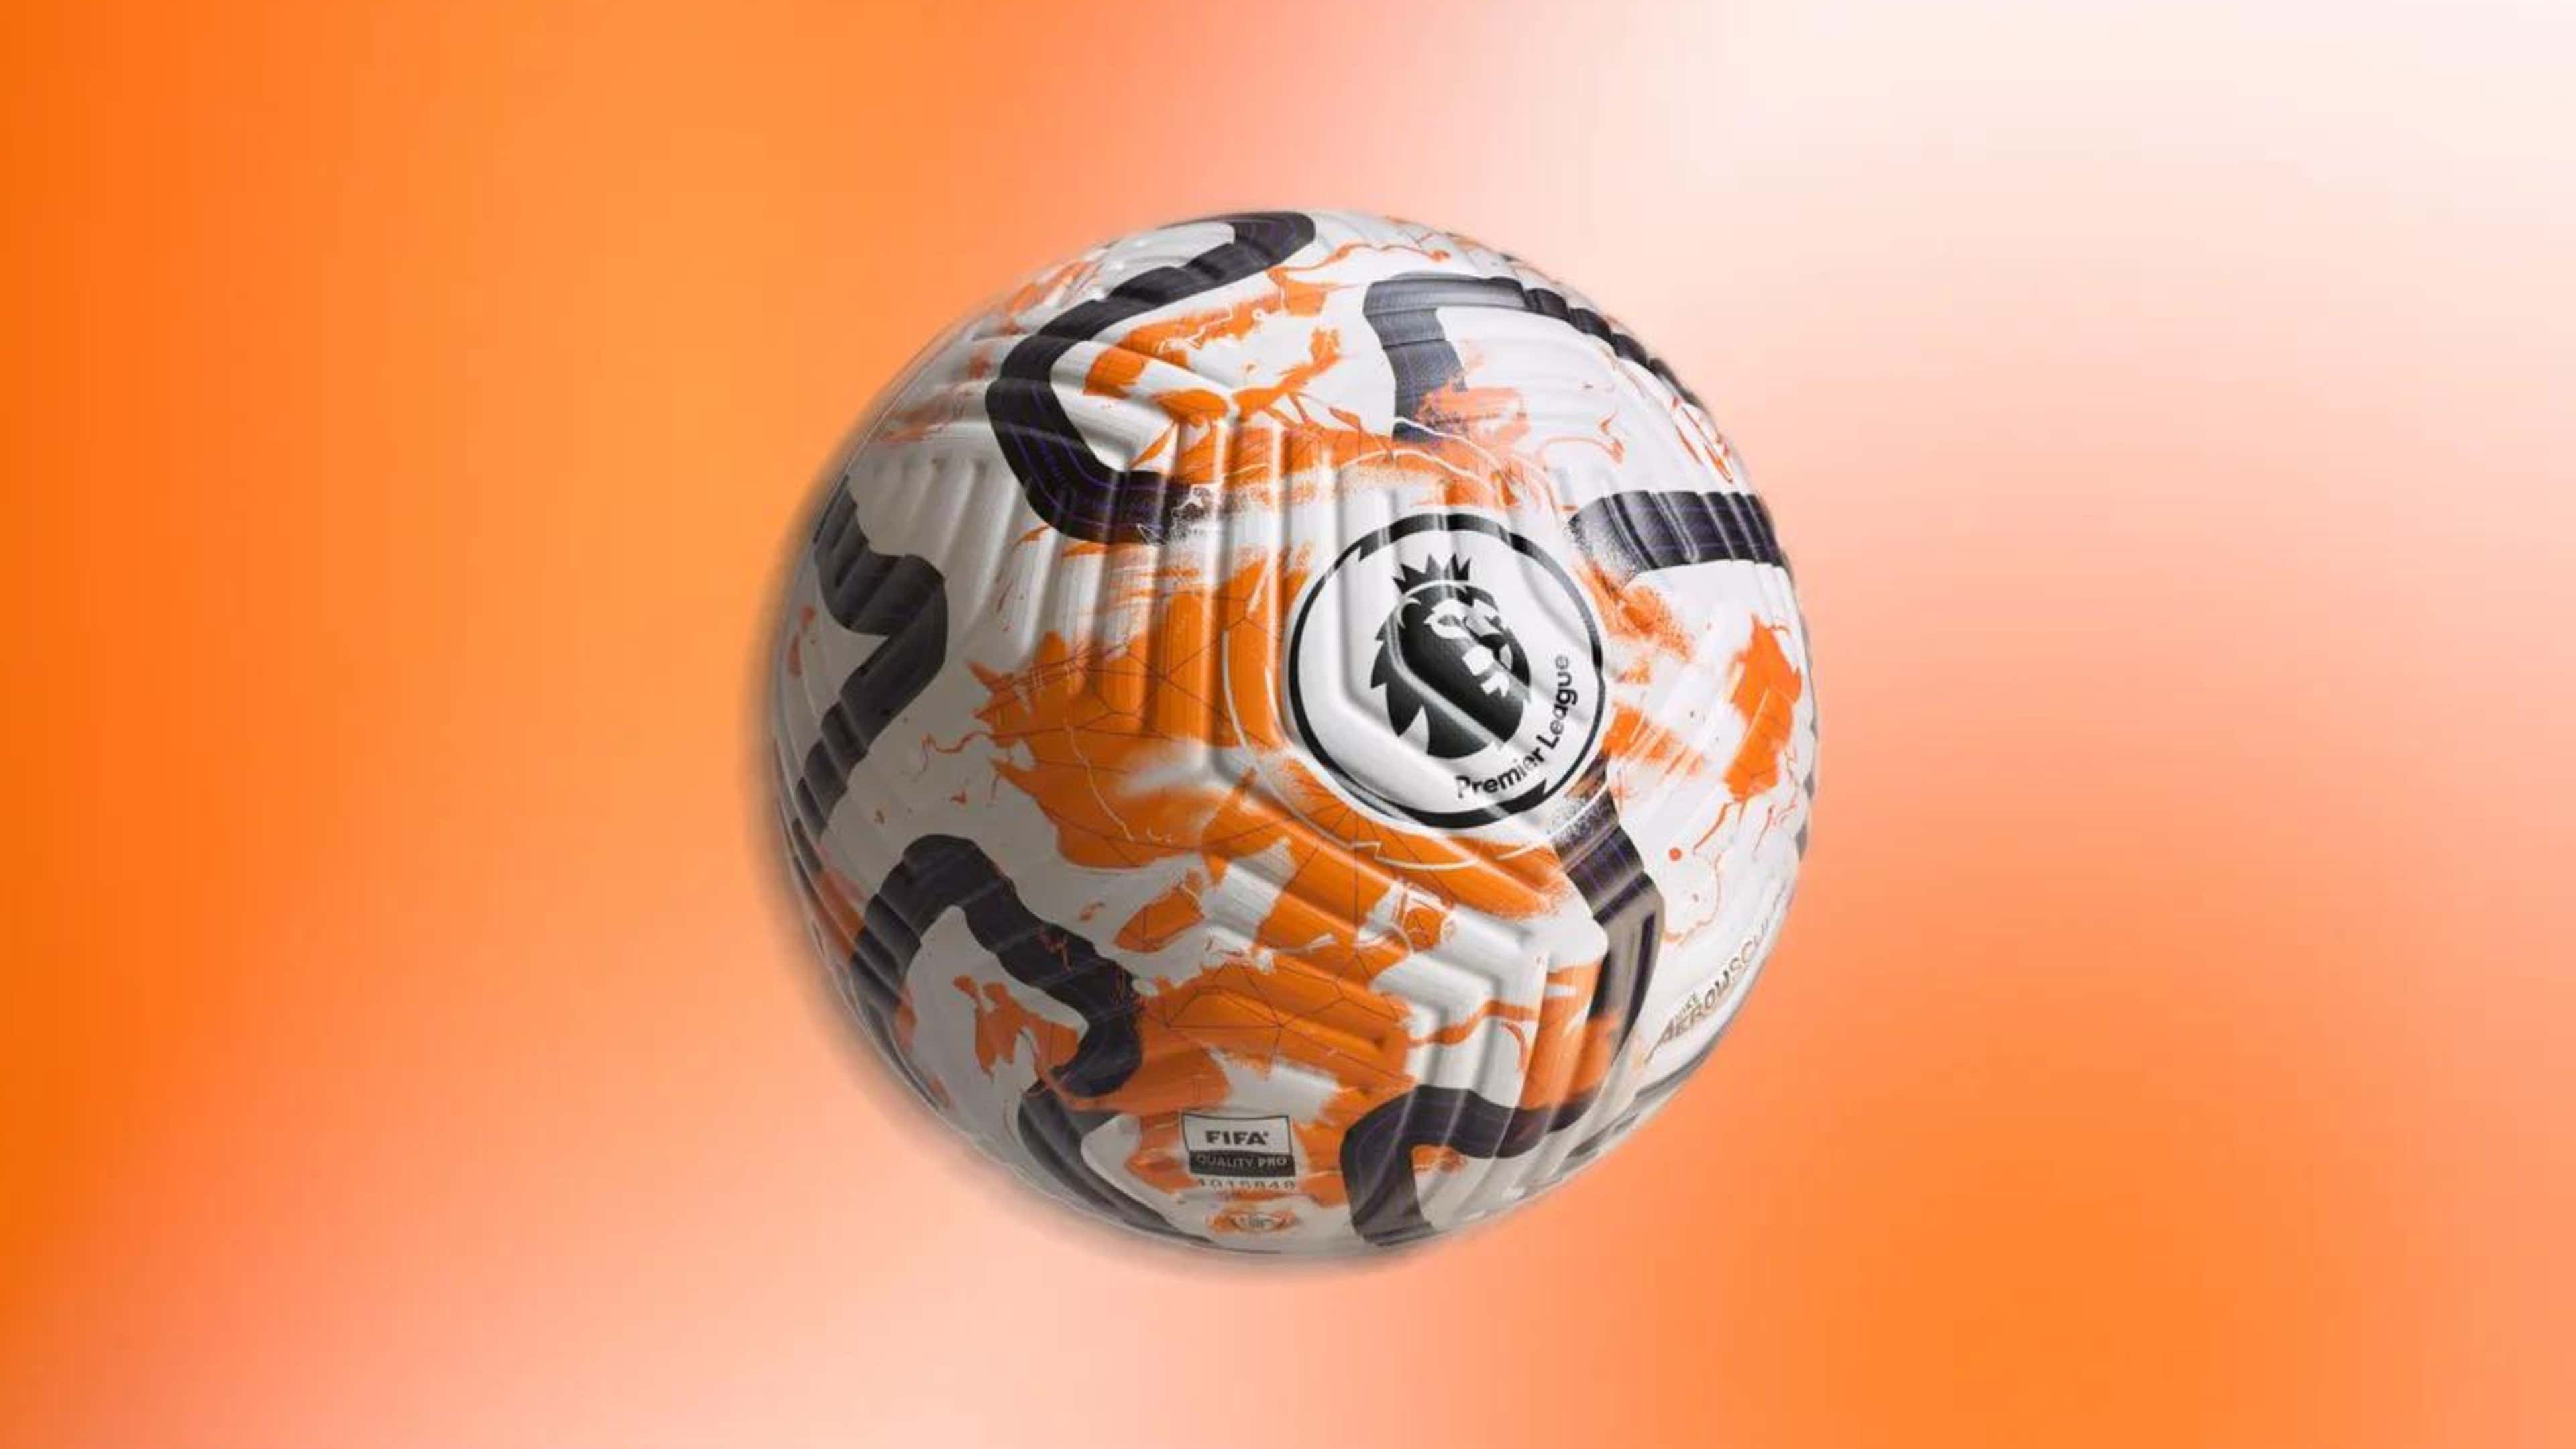 New Nike Flight Premier League ball released for 202324 season Goal